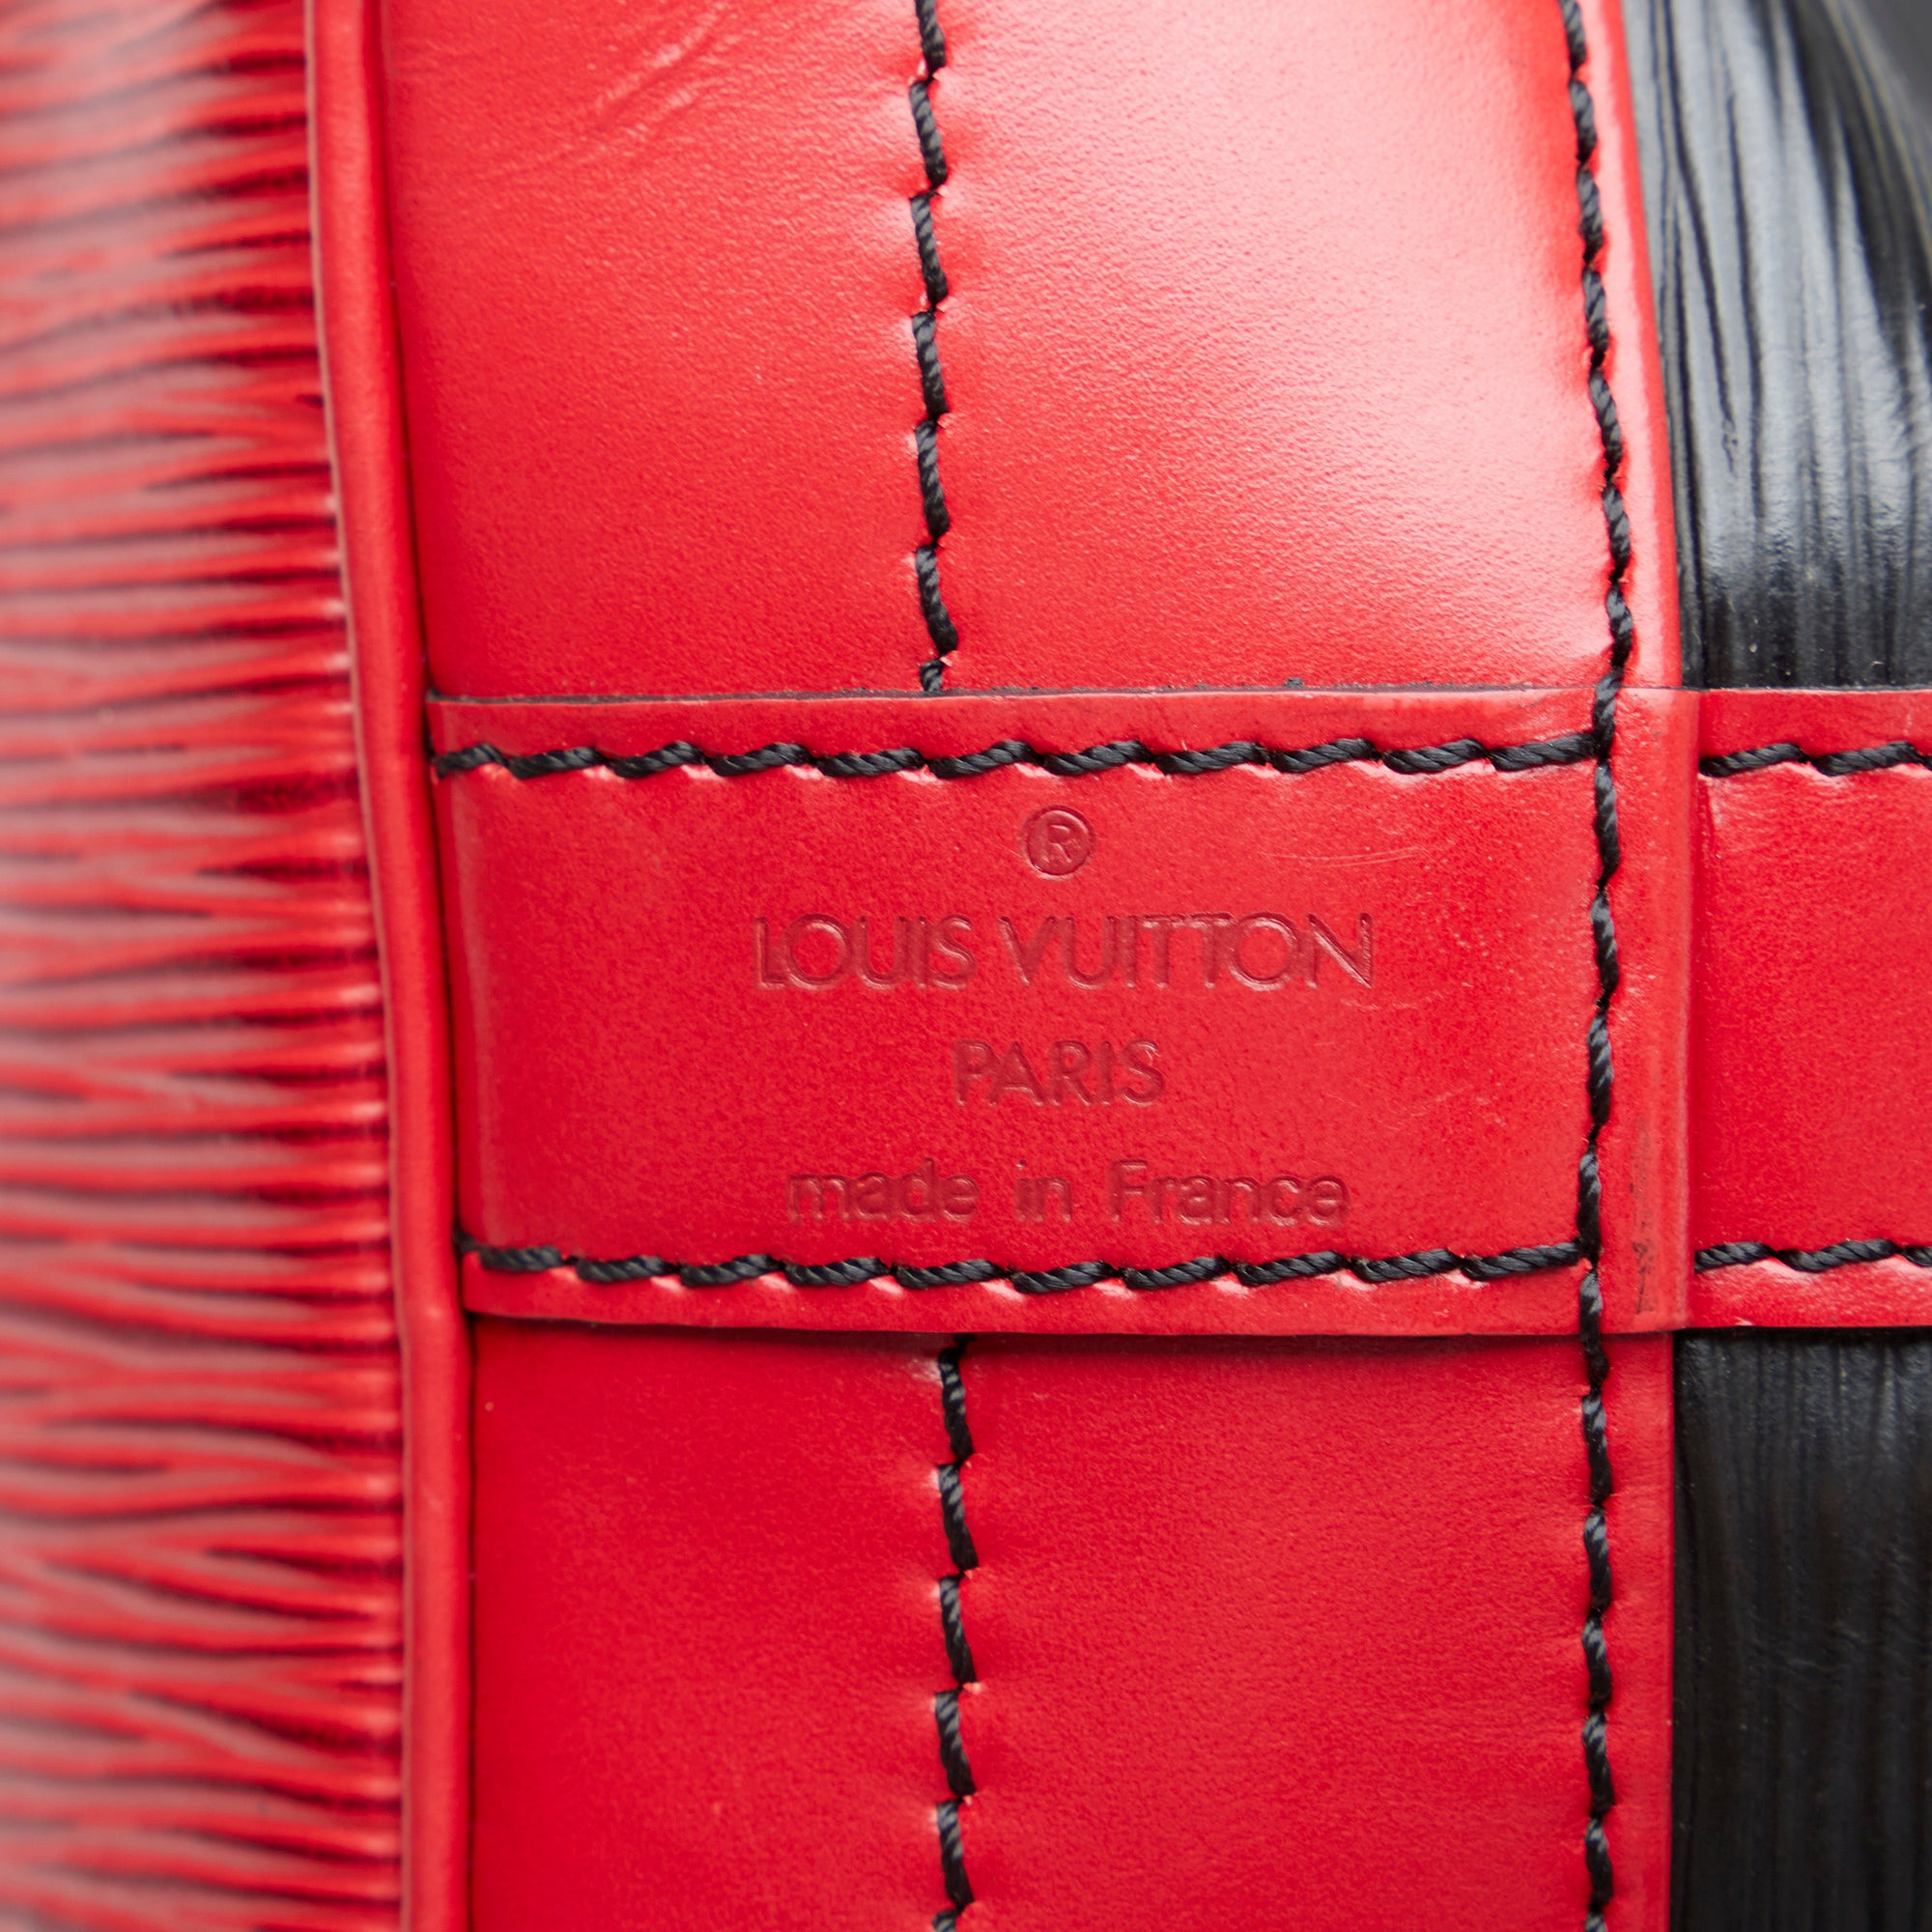 Fashionphile - The Louis Vuitton Noe was originally